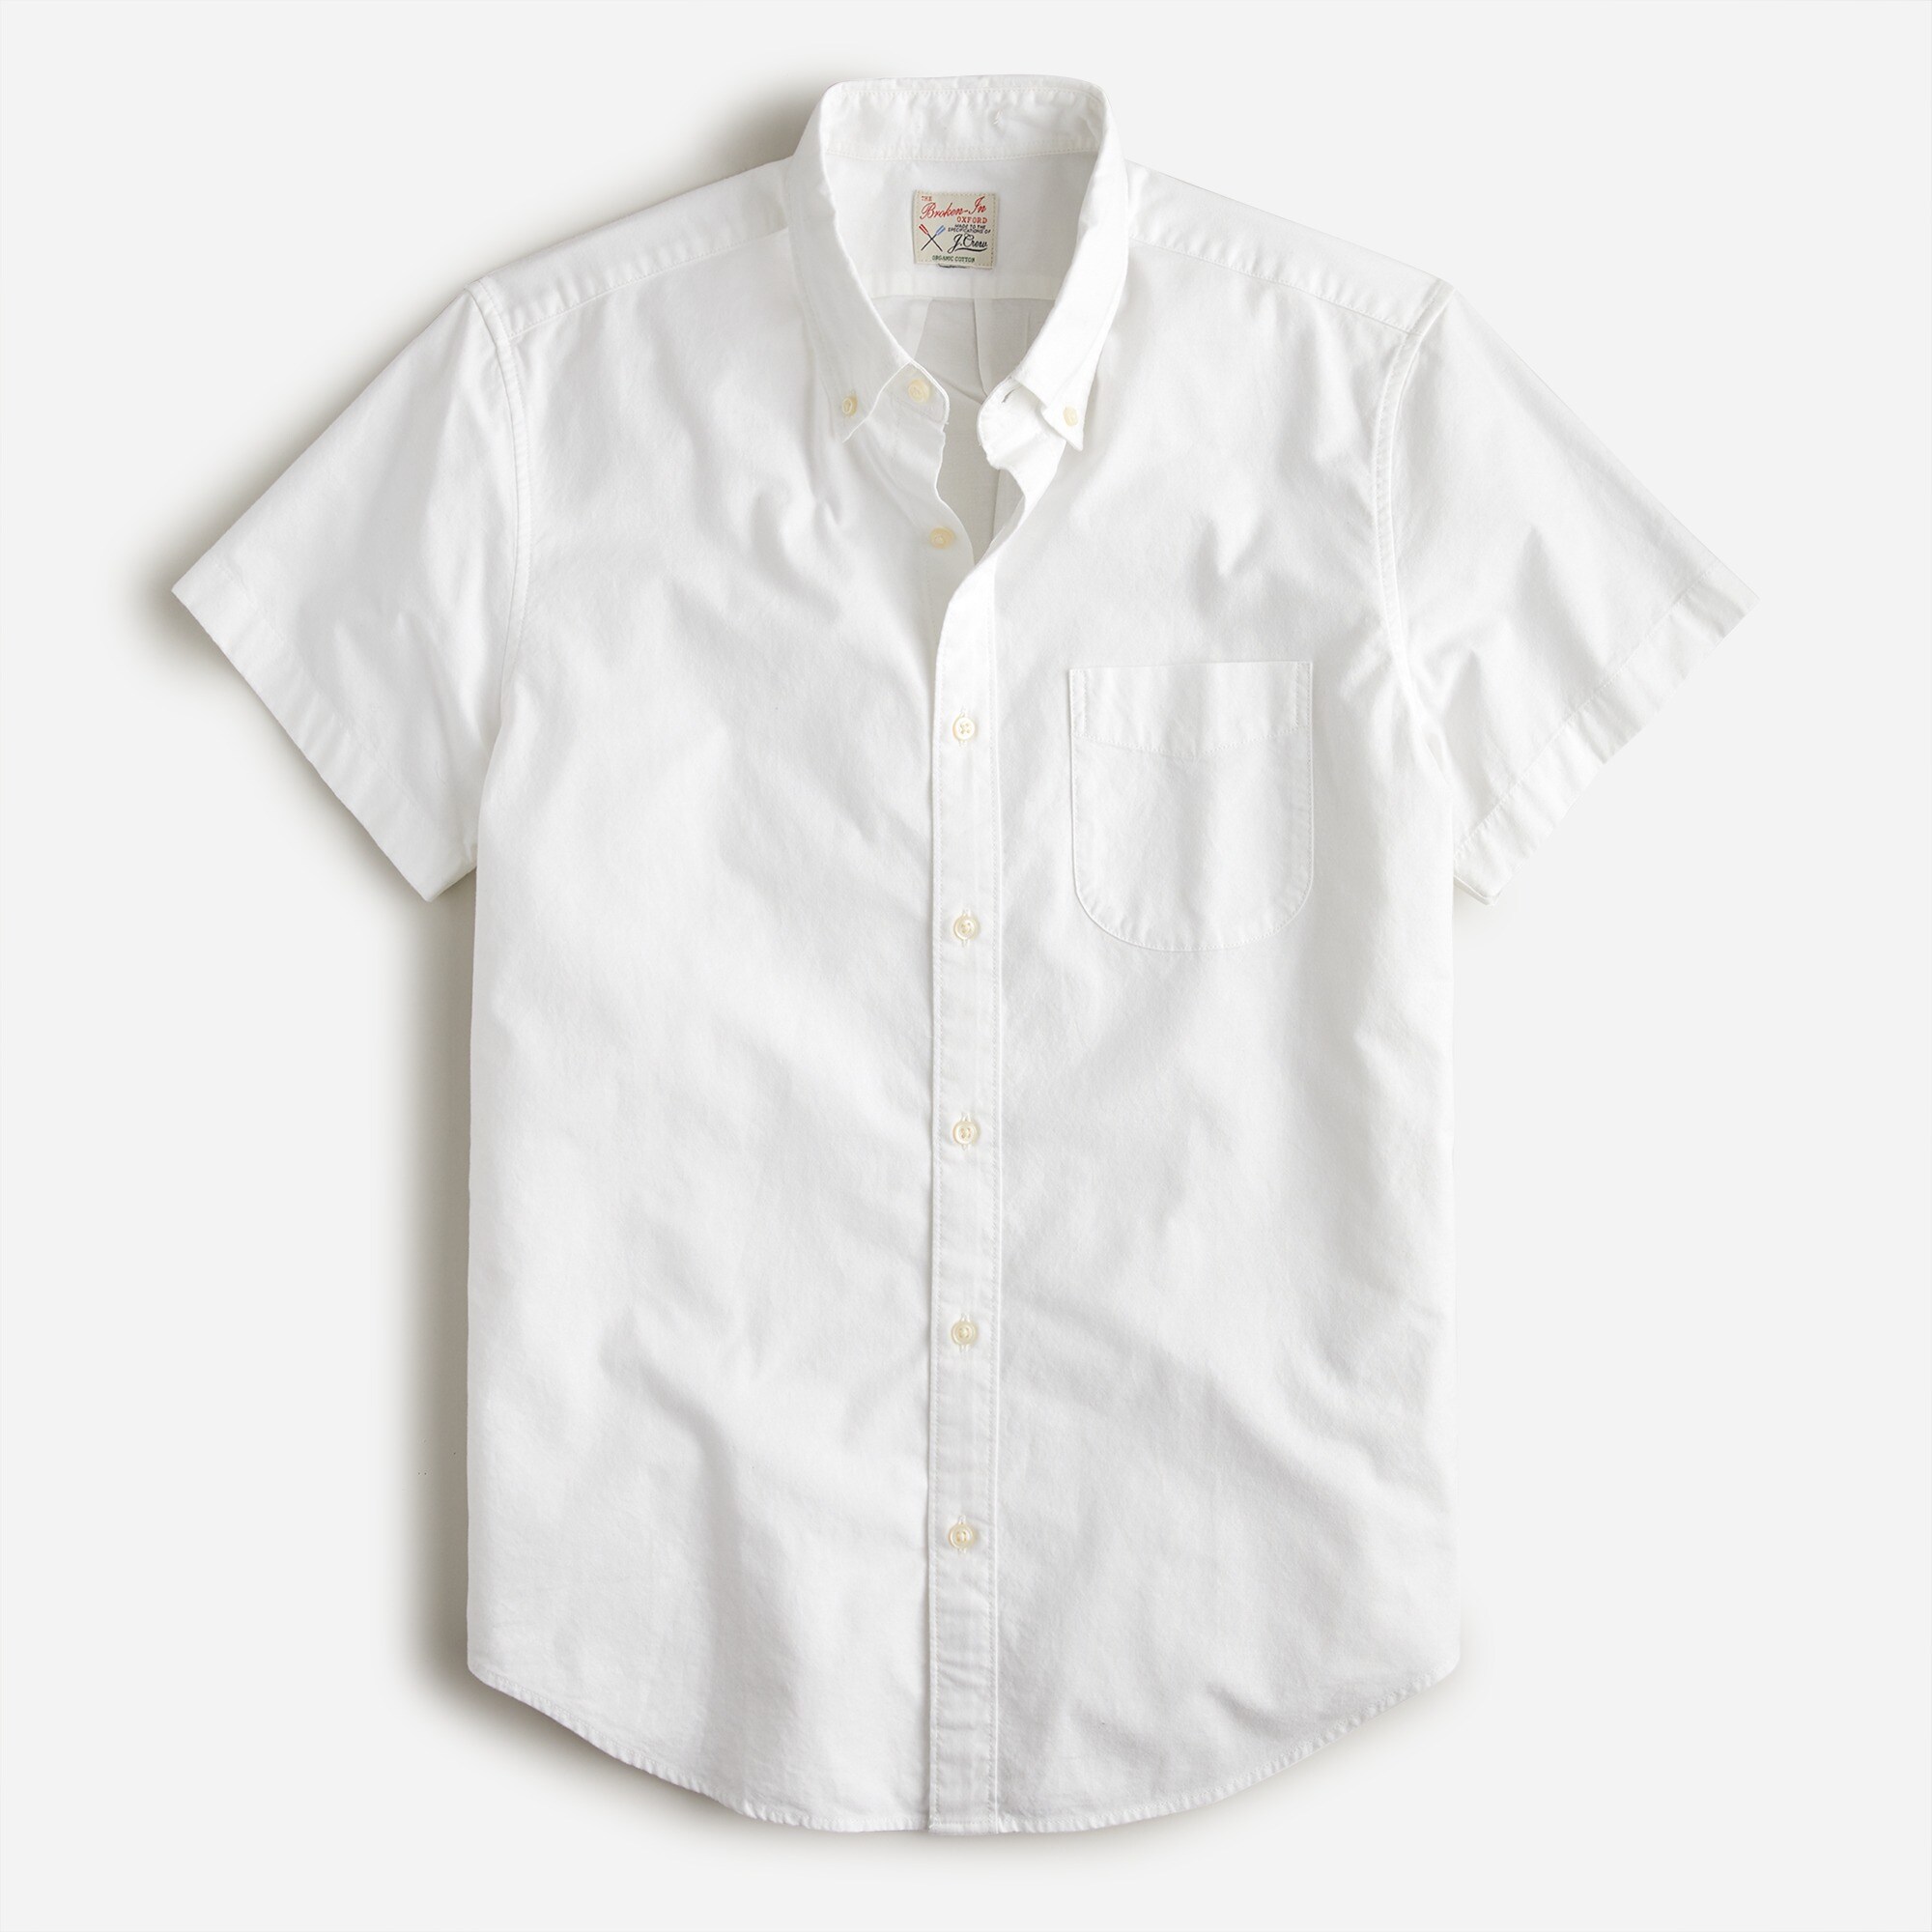 Jcrew Short-sleeve Broken-in organic cotton oxford shirt